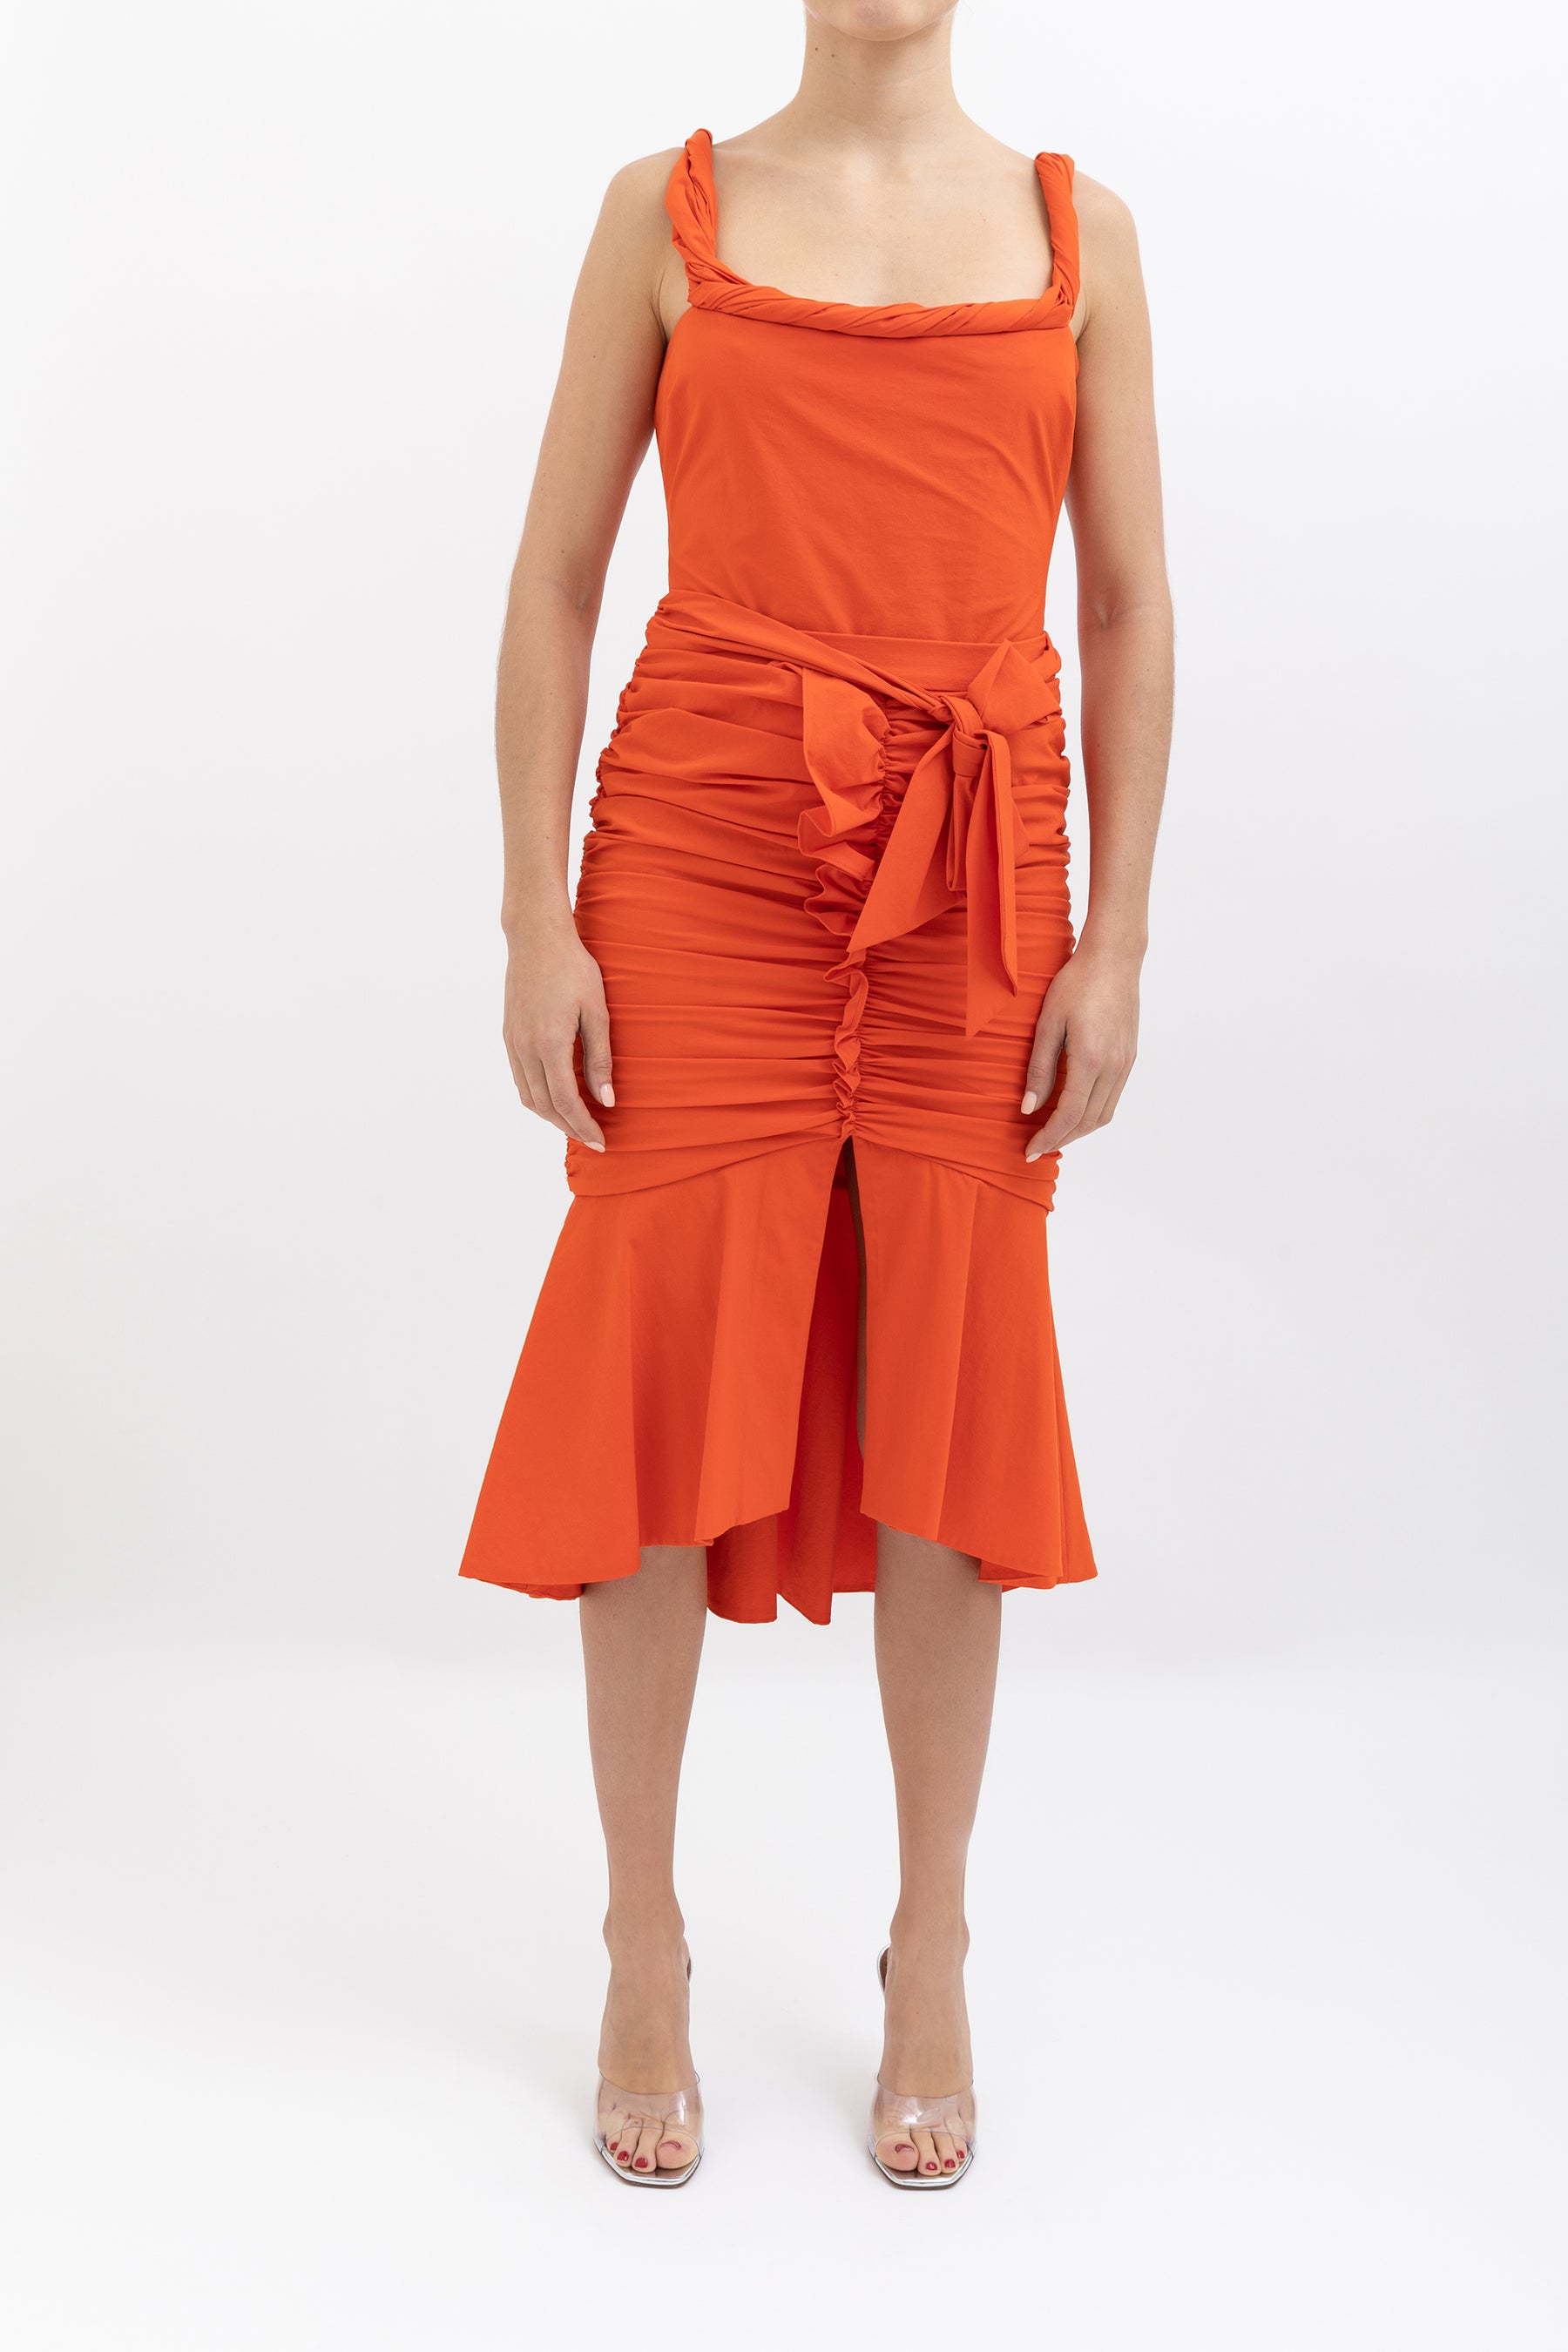 Brescia Bodysuit and Ruched Skirt Set